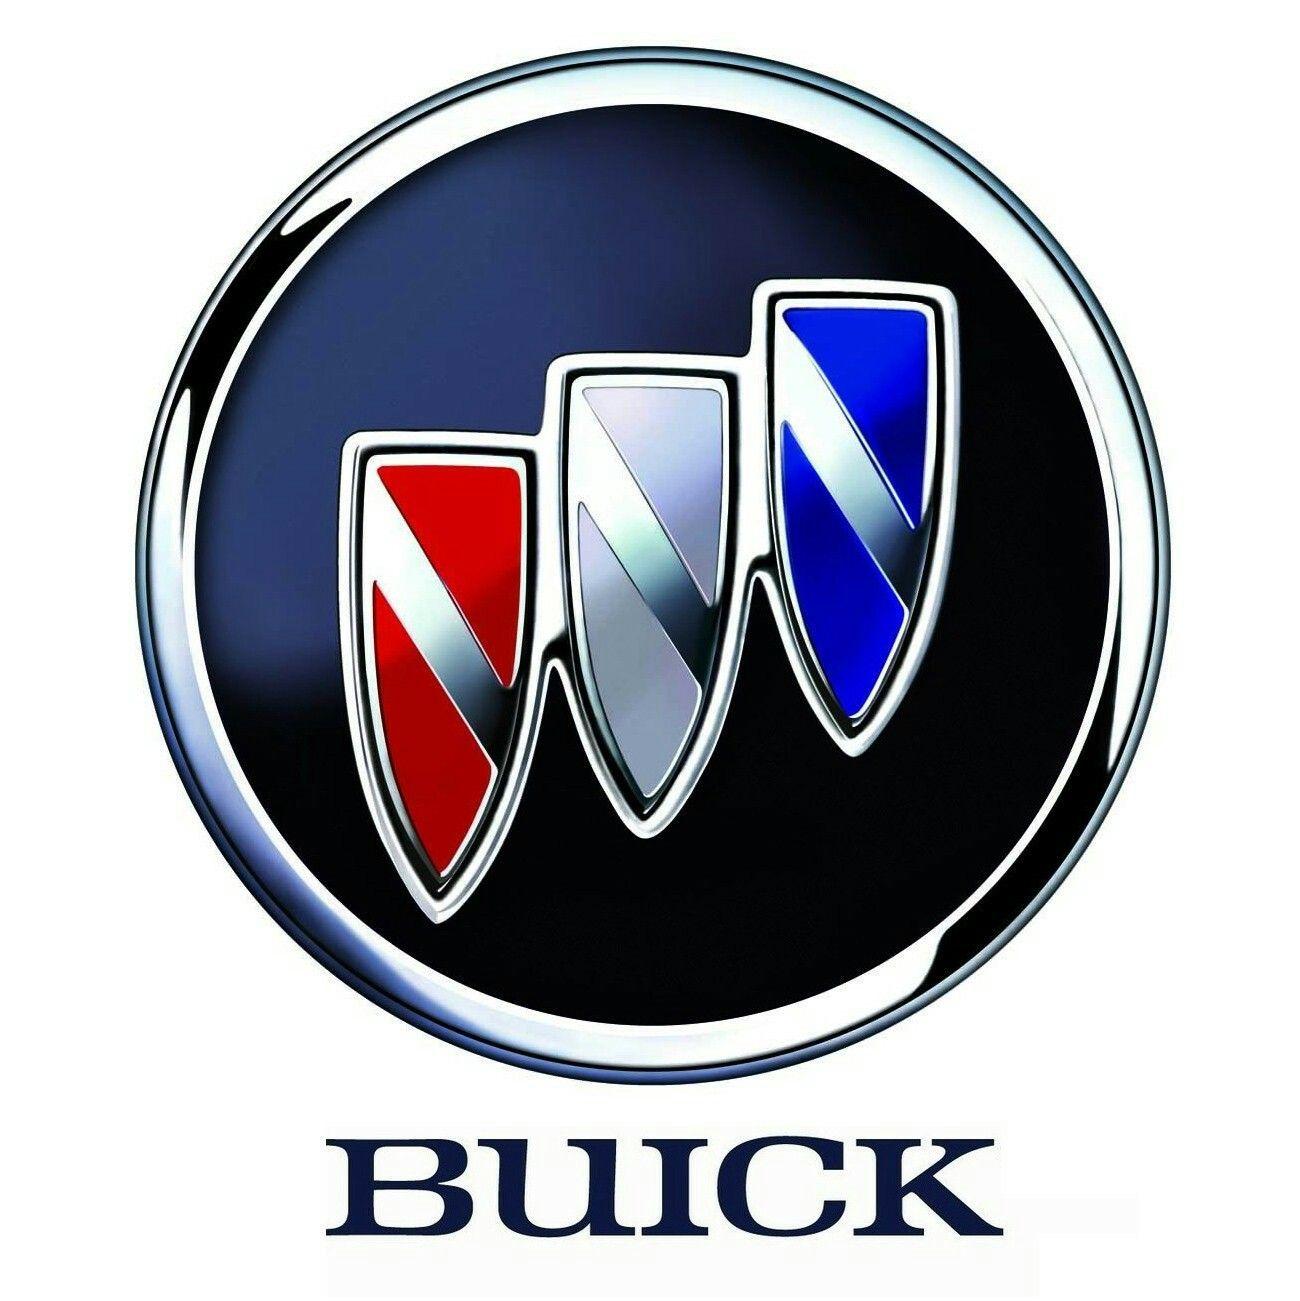 Buik Logo - Buick Logo, Buick Car Symbol Meaning and History | Car Brand ...